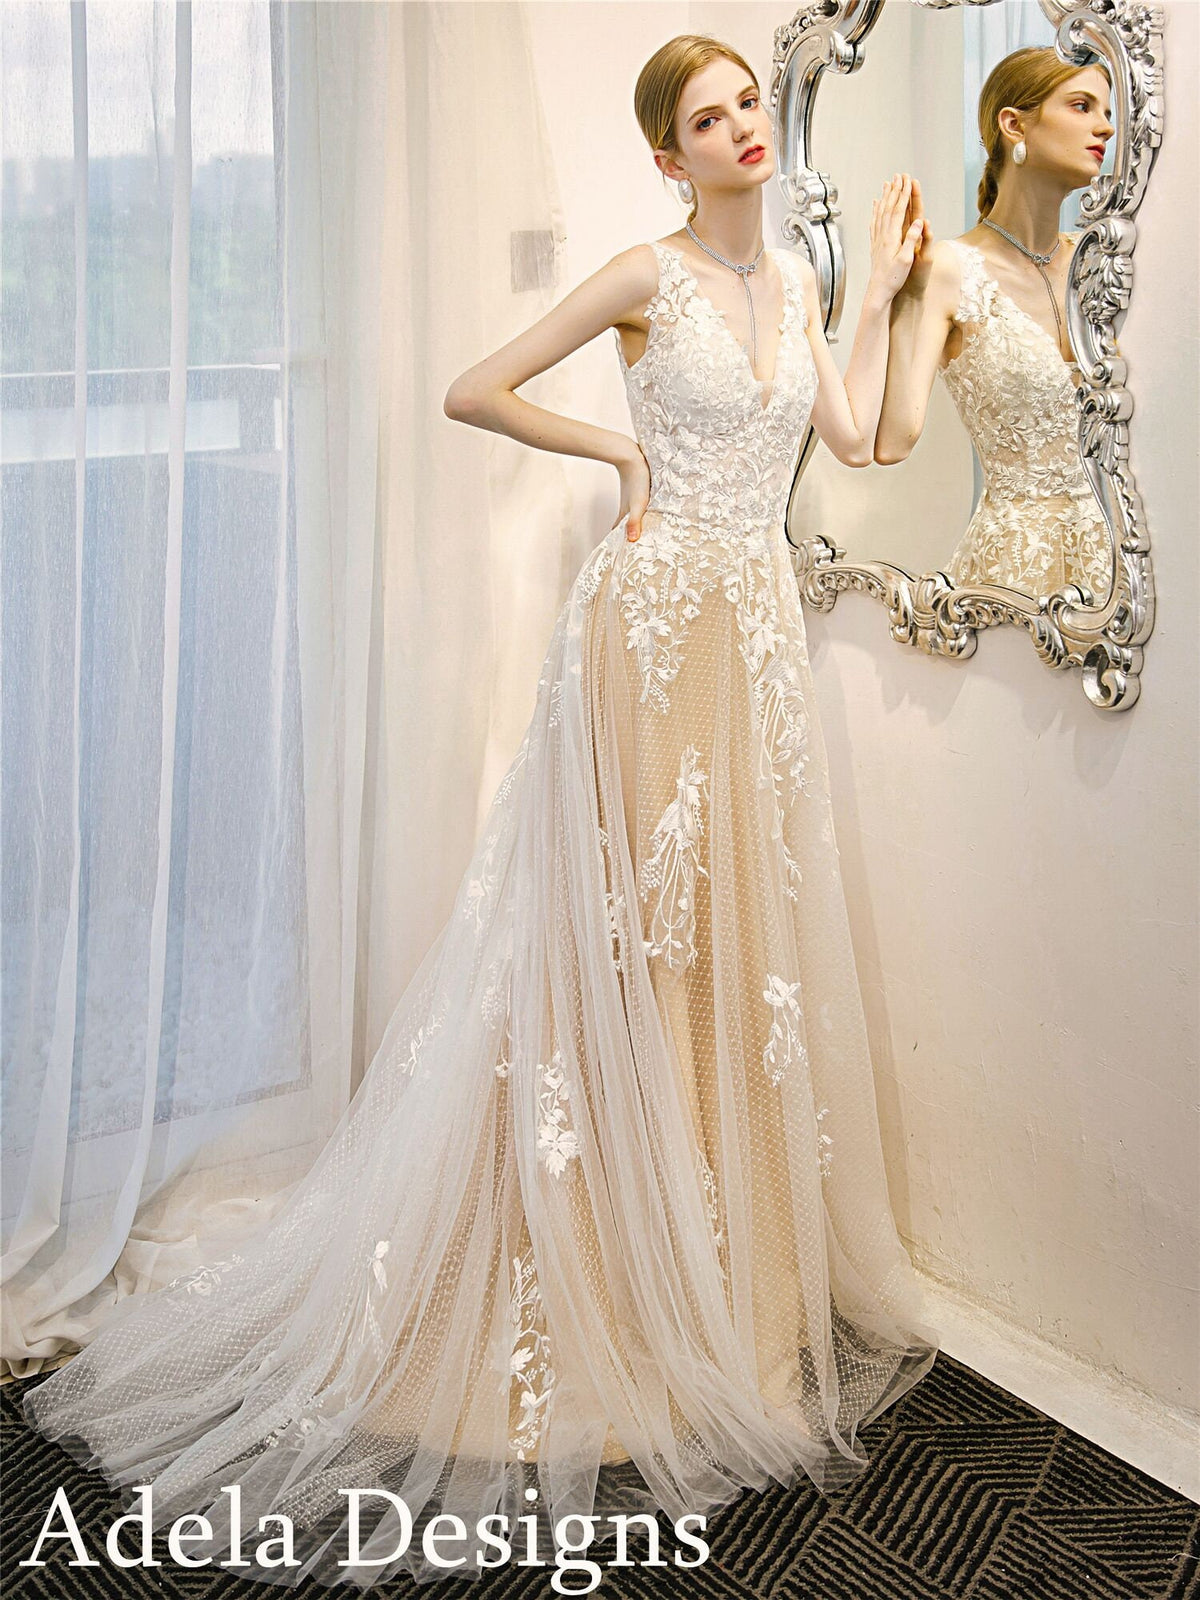 A-Line Boho Floral Lace Wedding Dress Bridal Gown V Neckline Sleeveless Floral Lace Polka Dot Tulle Short Train Classic Design